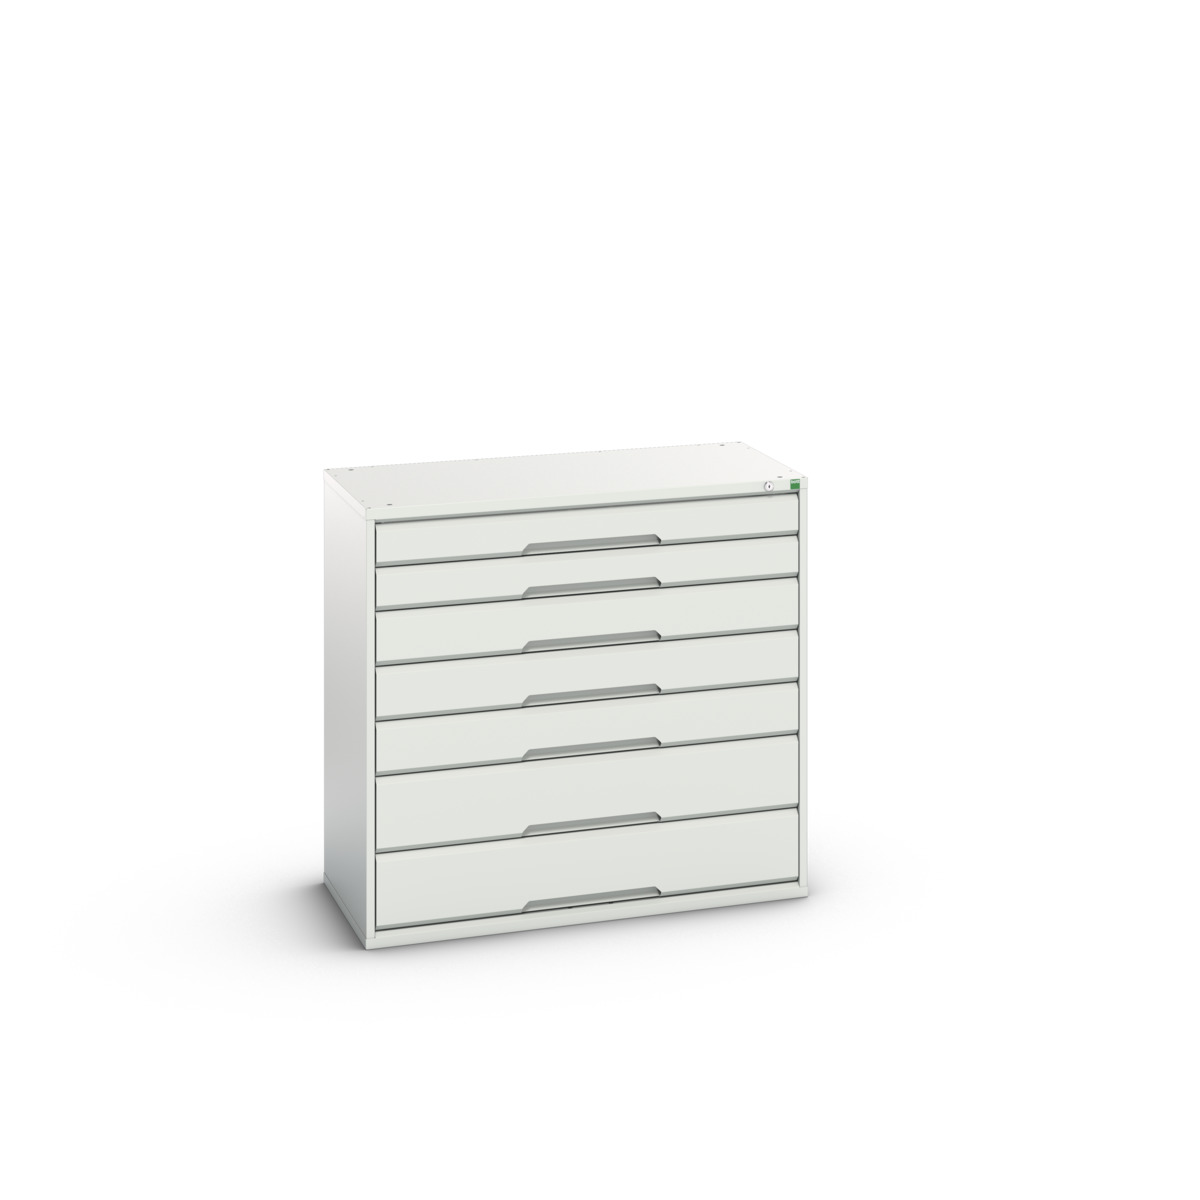 16925549.16 - verso drawer cabinet